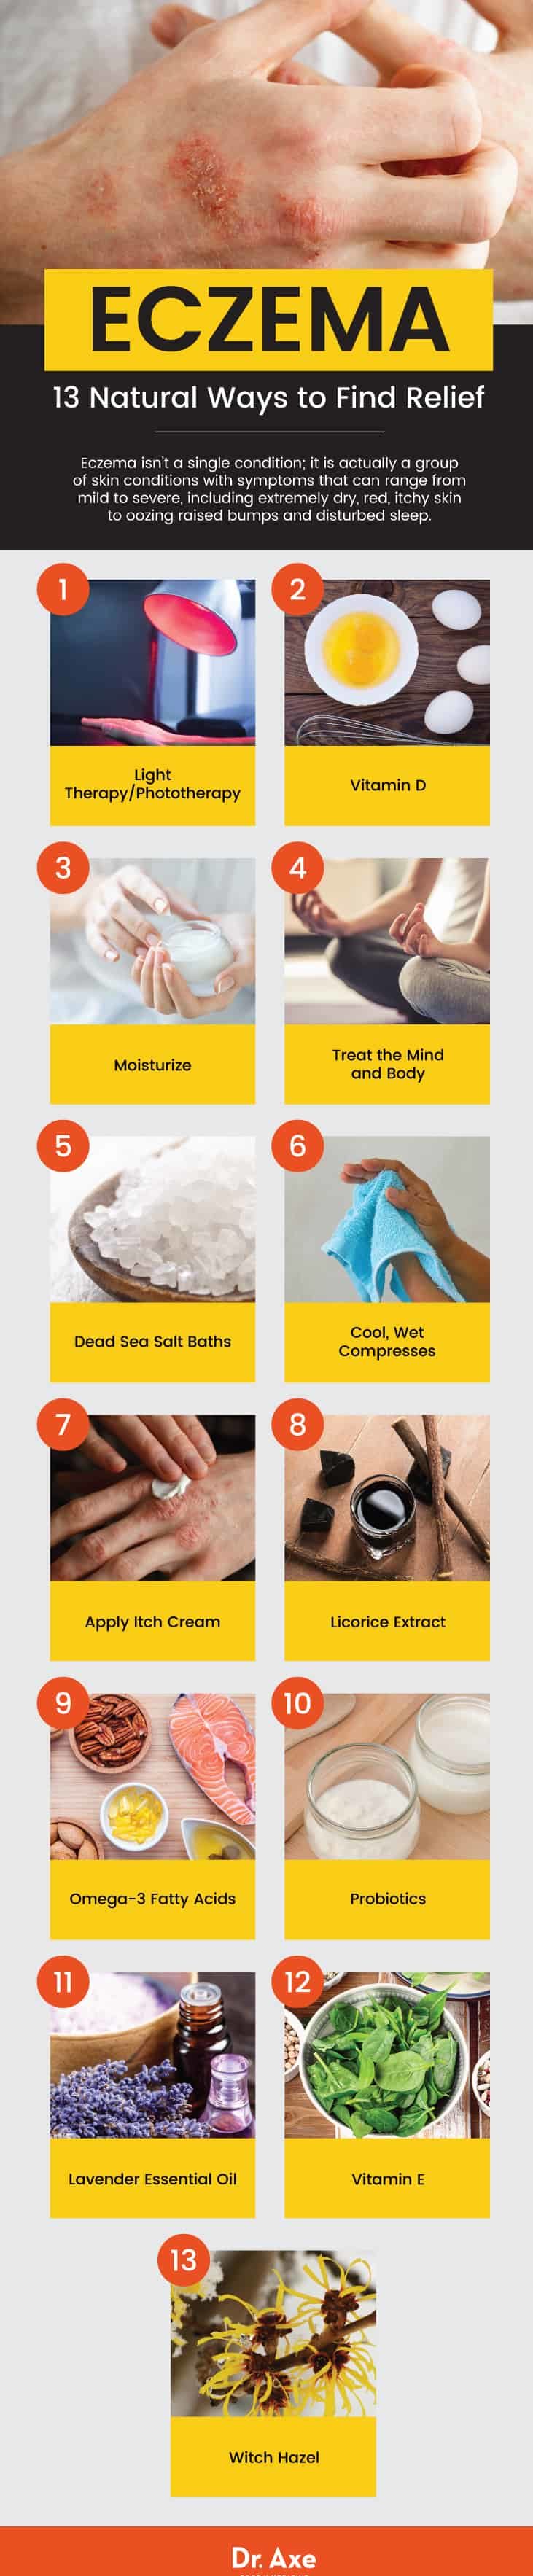 Eczema treatment: 13 natural ways - Dr. Axe